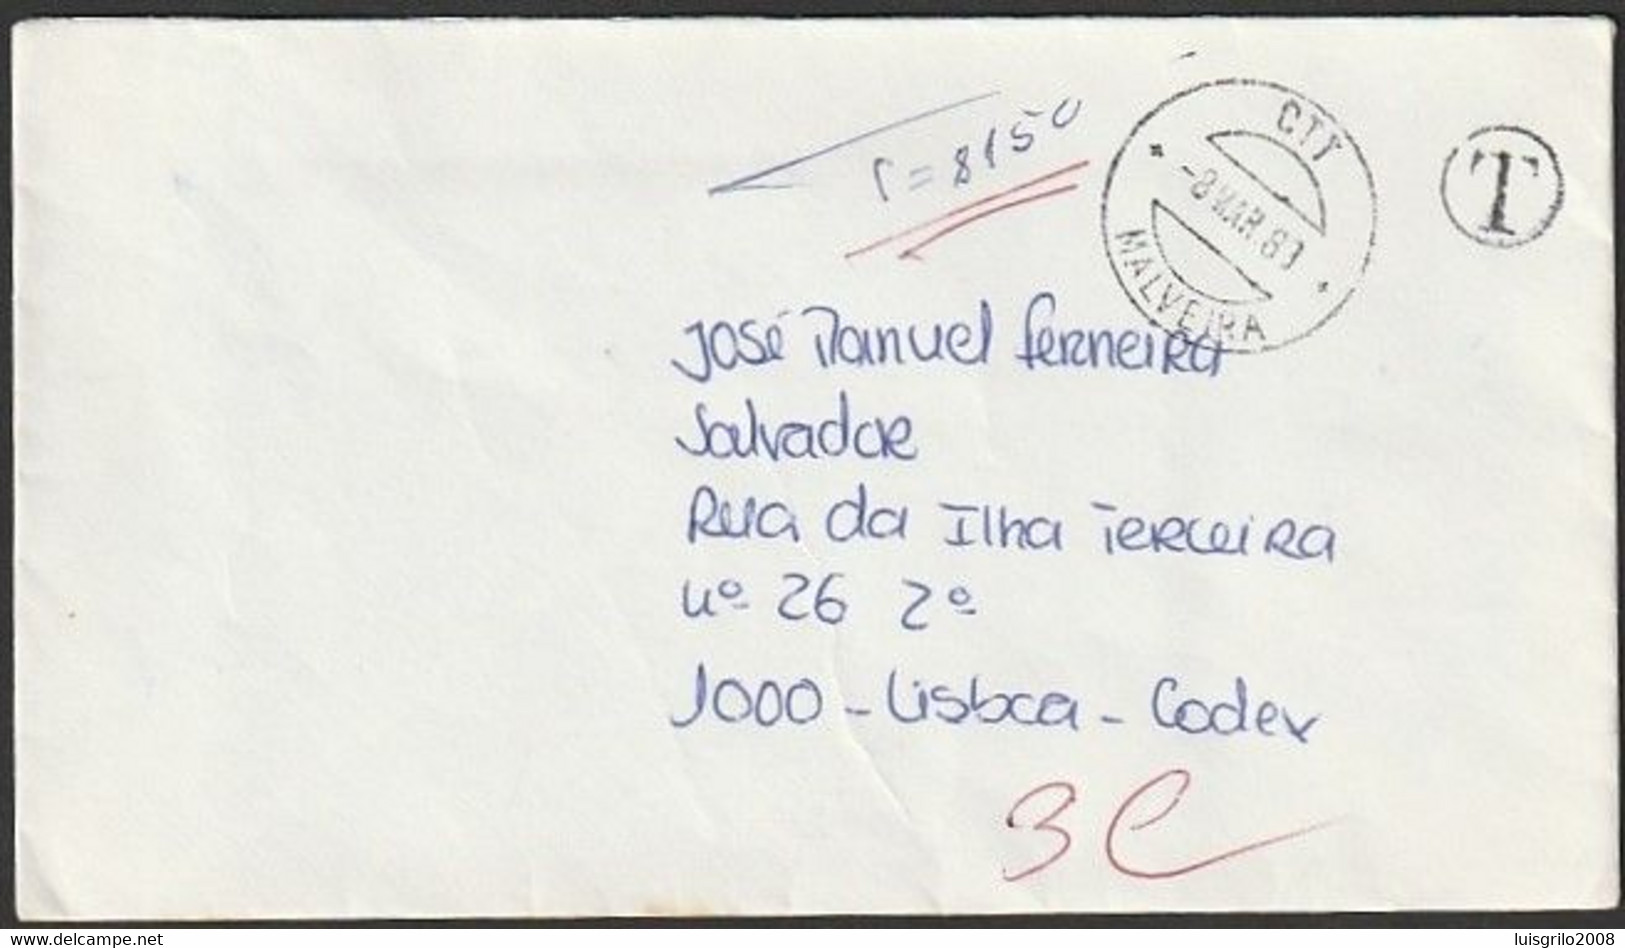 Postage Due / Tax - Porteado / Multa (T) - 81.50 -|- Portugal, 1983 - Storia Postale